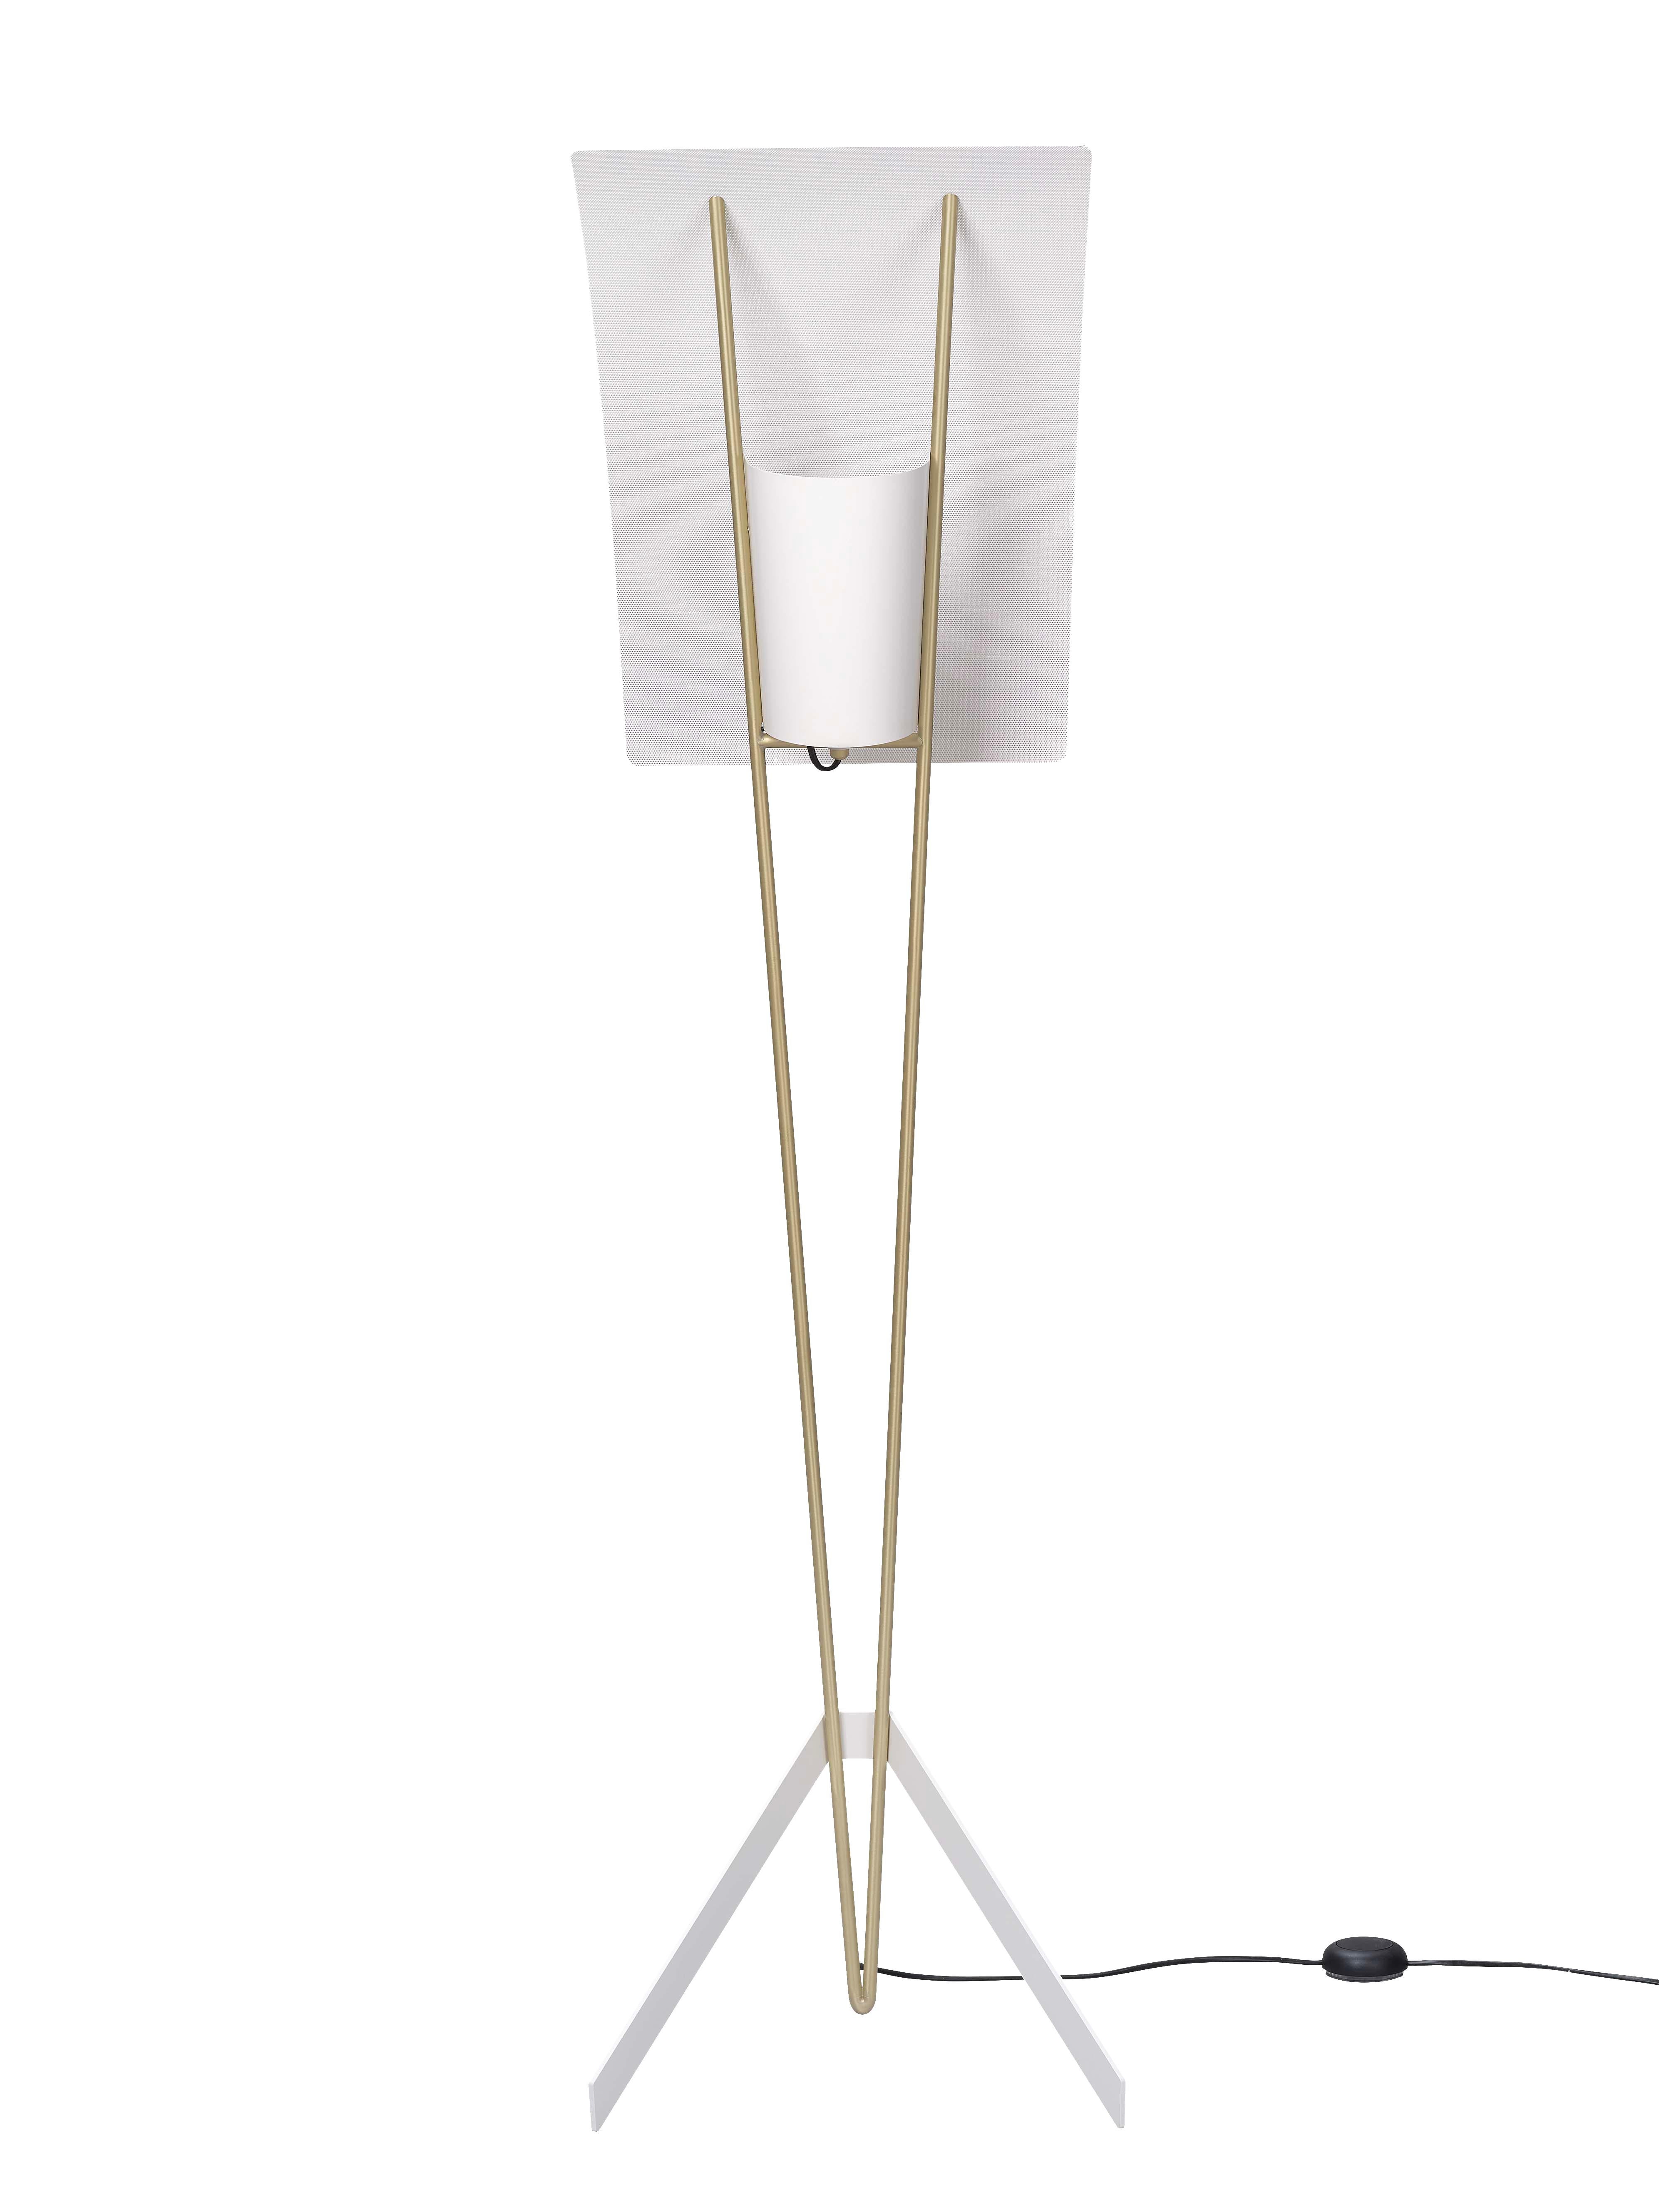 Pierre Guariche Kite Floor Lamp in Black and White for Sammode Studio For Sale 6